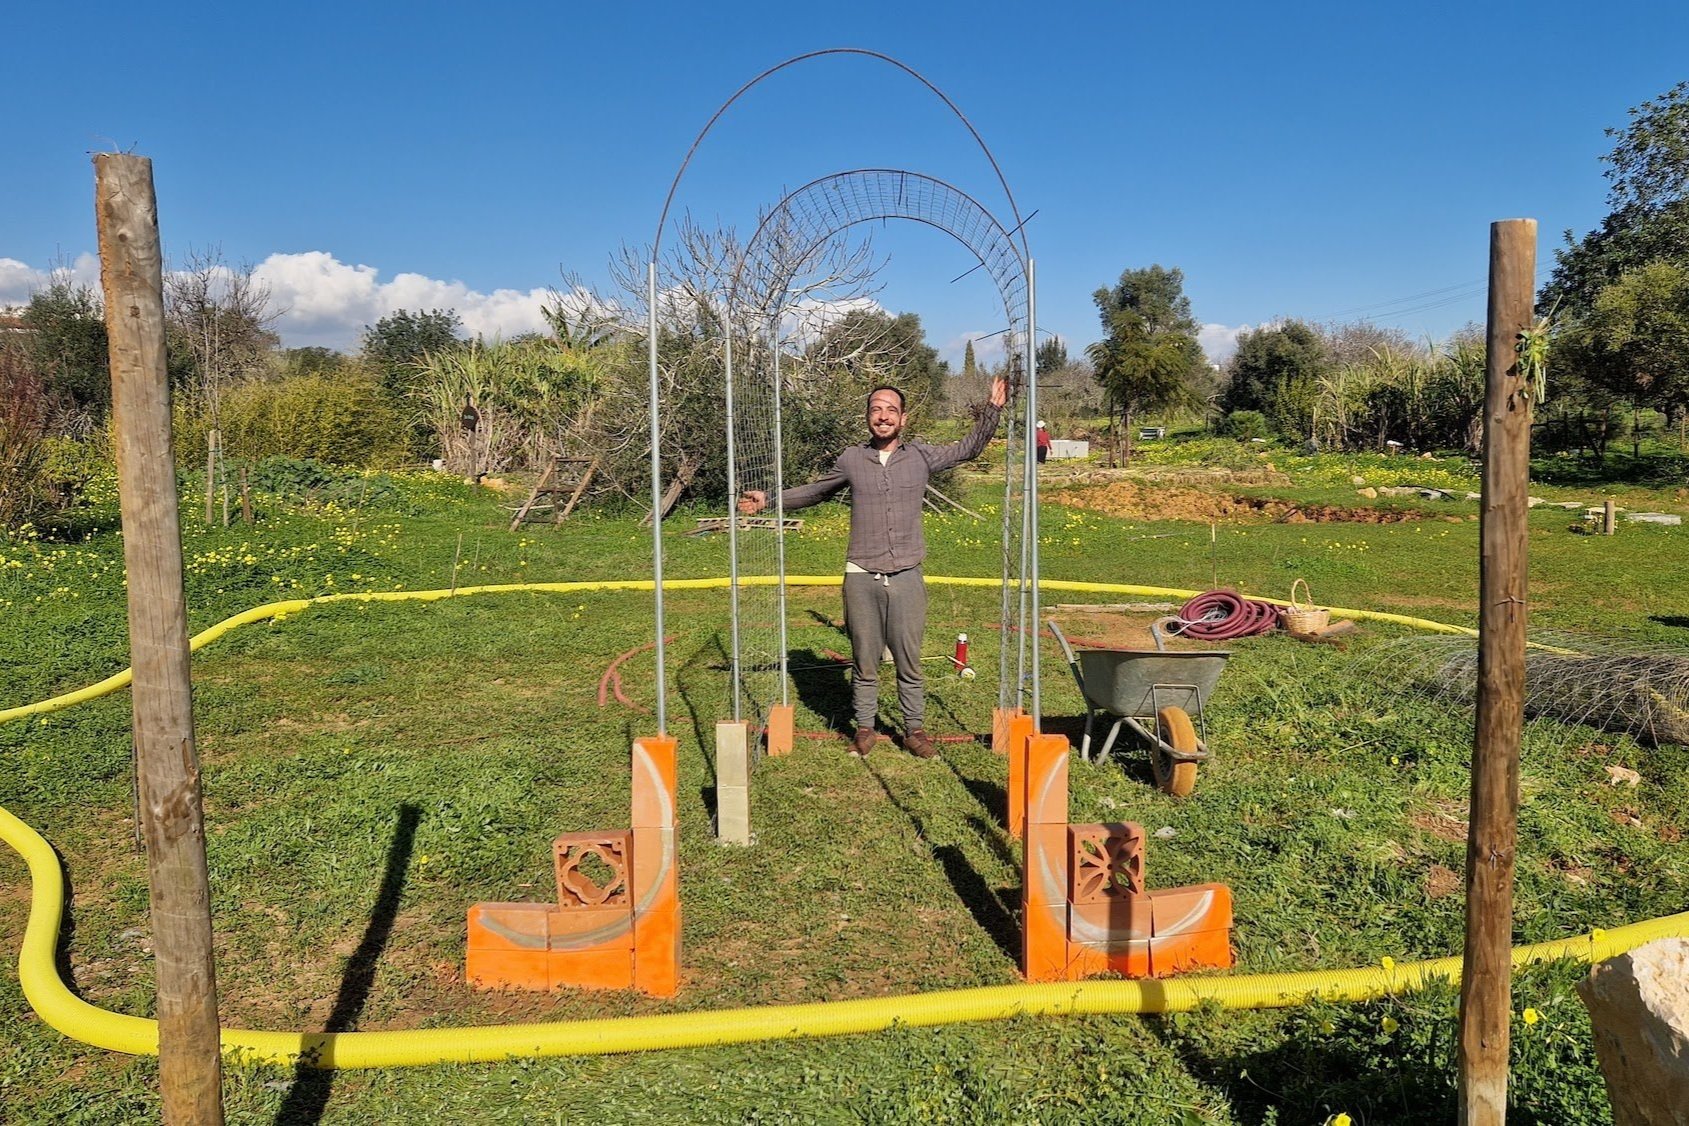 WWOOFer Leonardo setting up an archway for vine growing, on the new Miyawaki Food Forest experiment